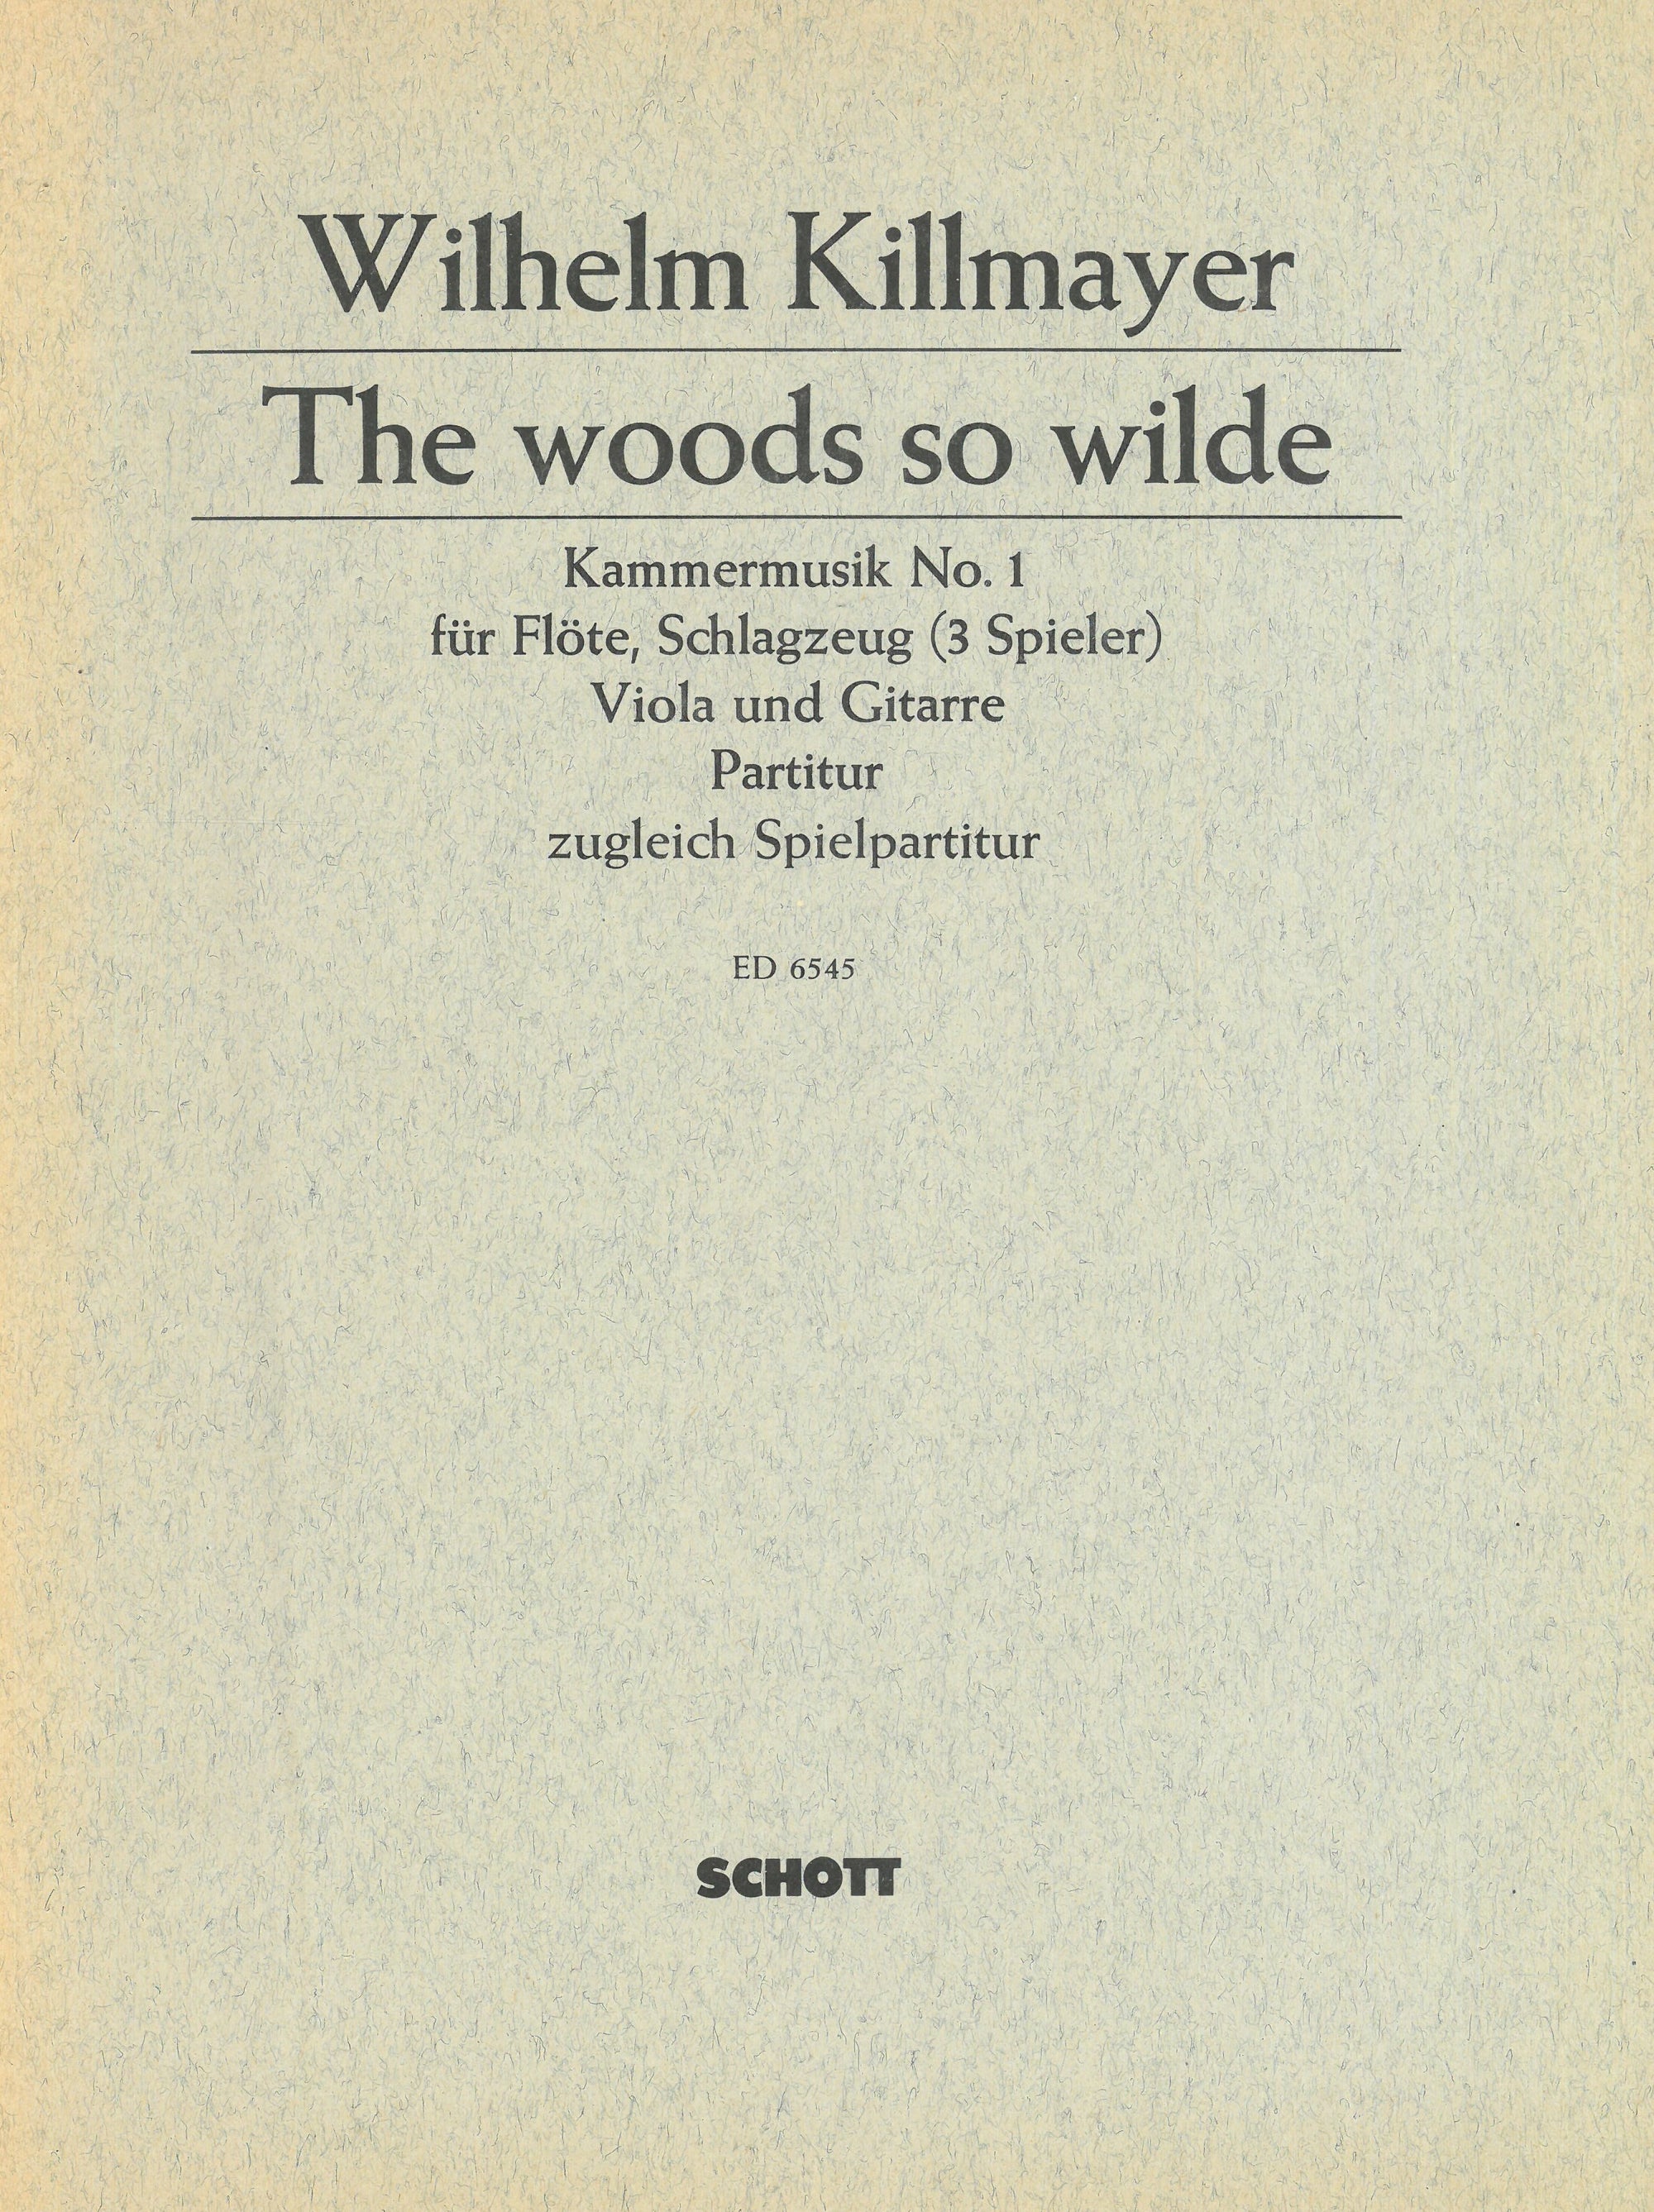 Killmayer: The woods so wilde